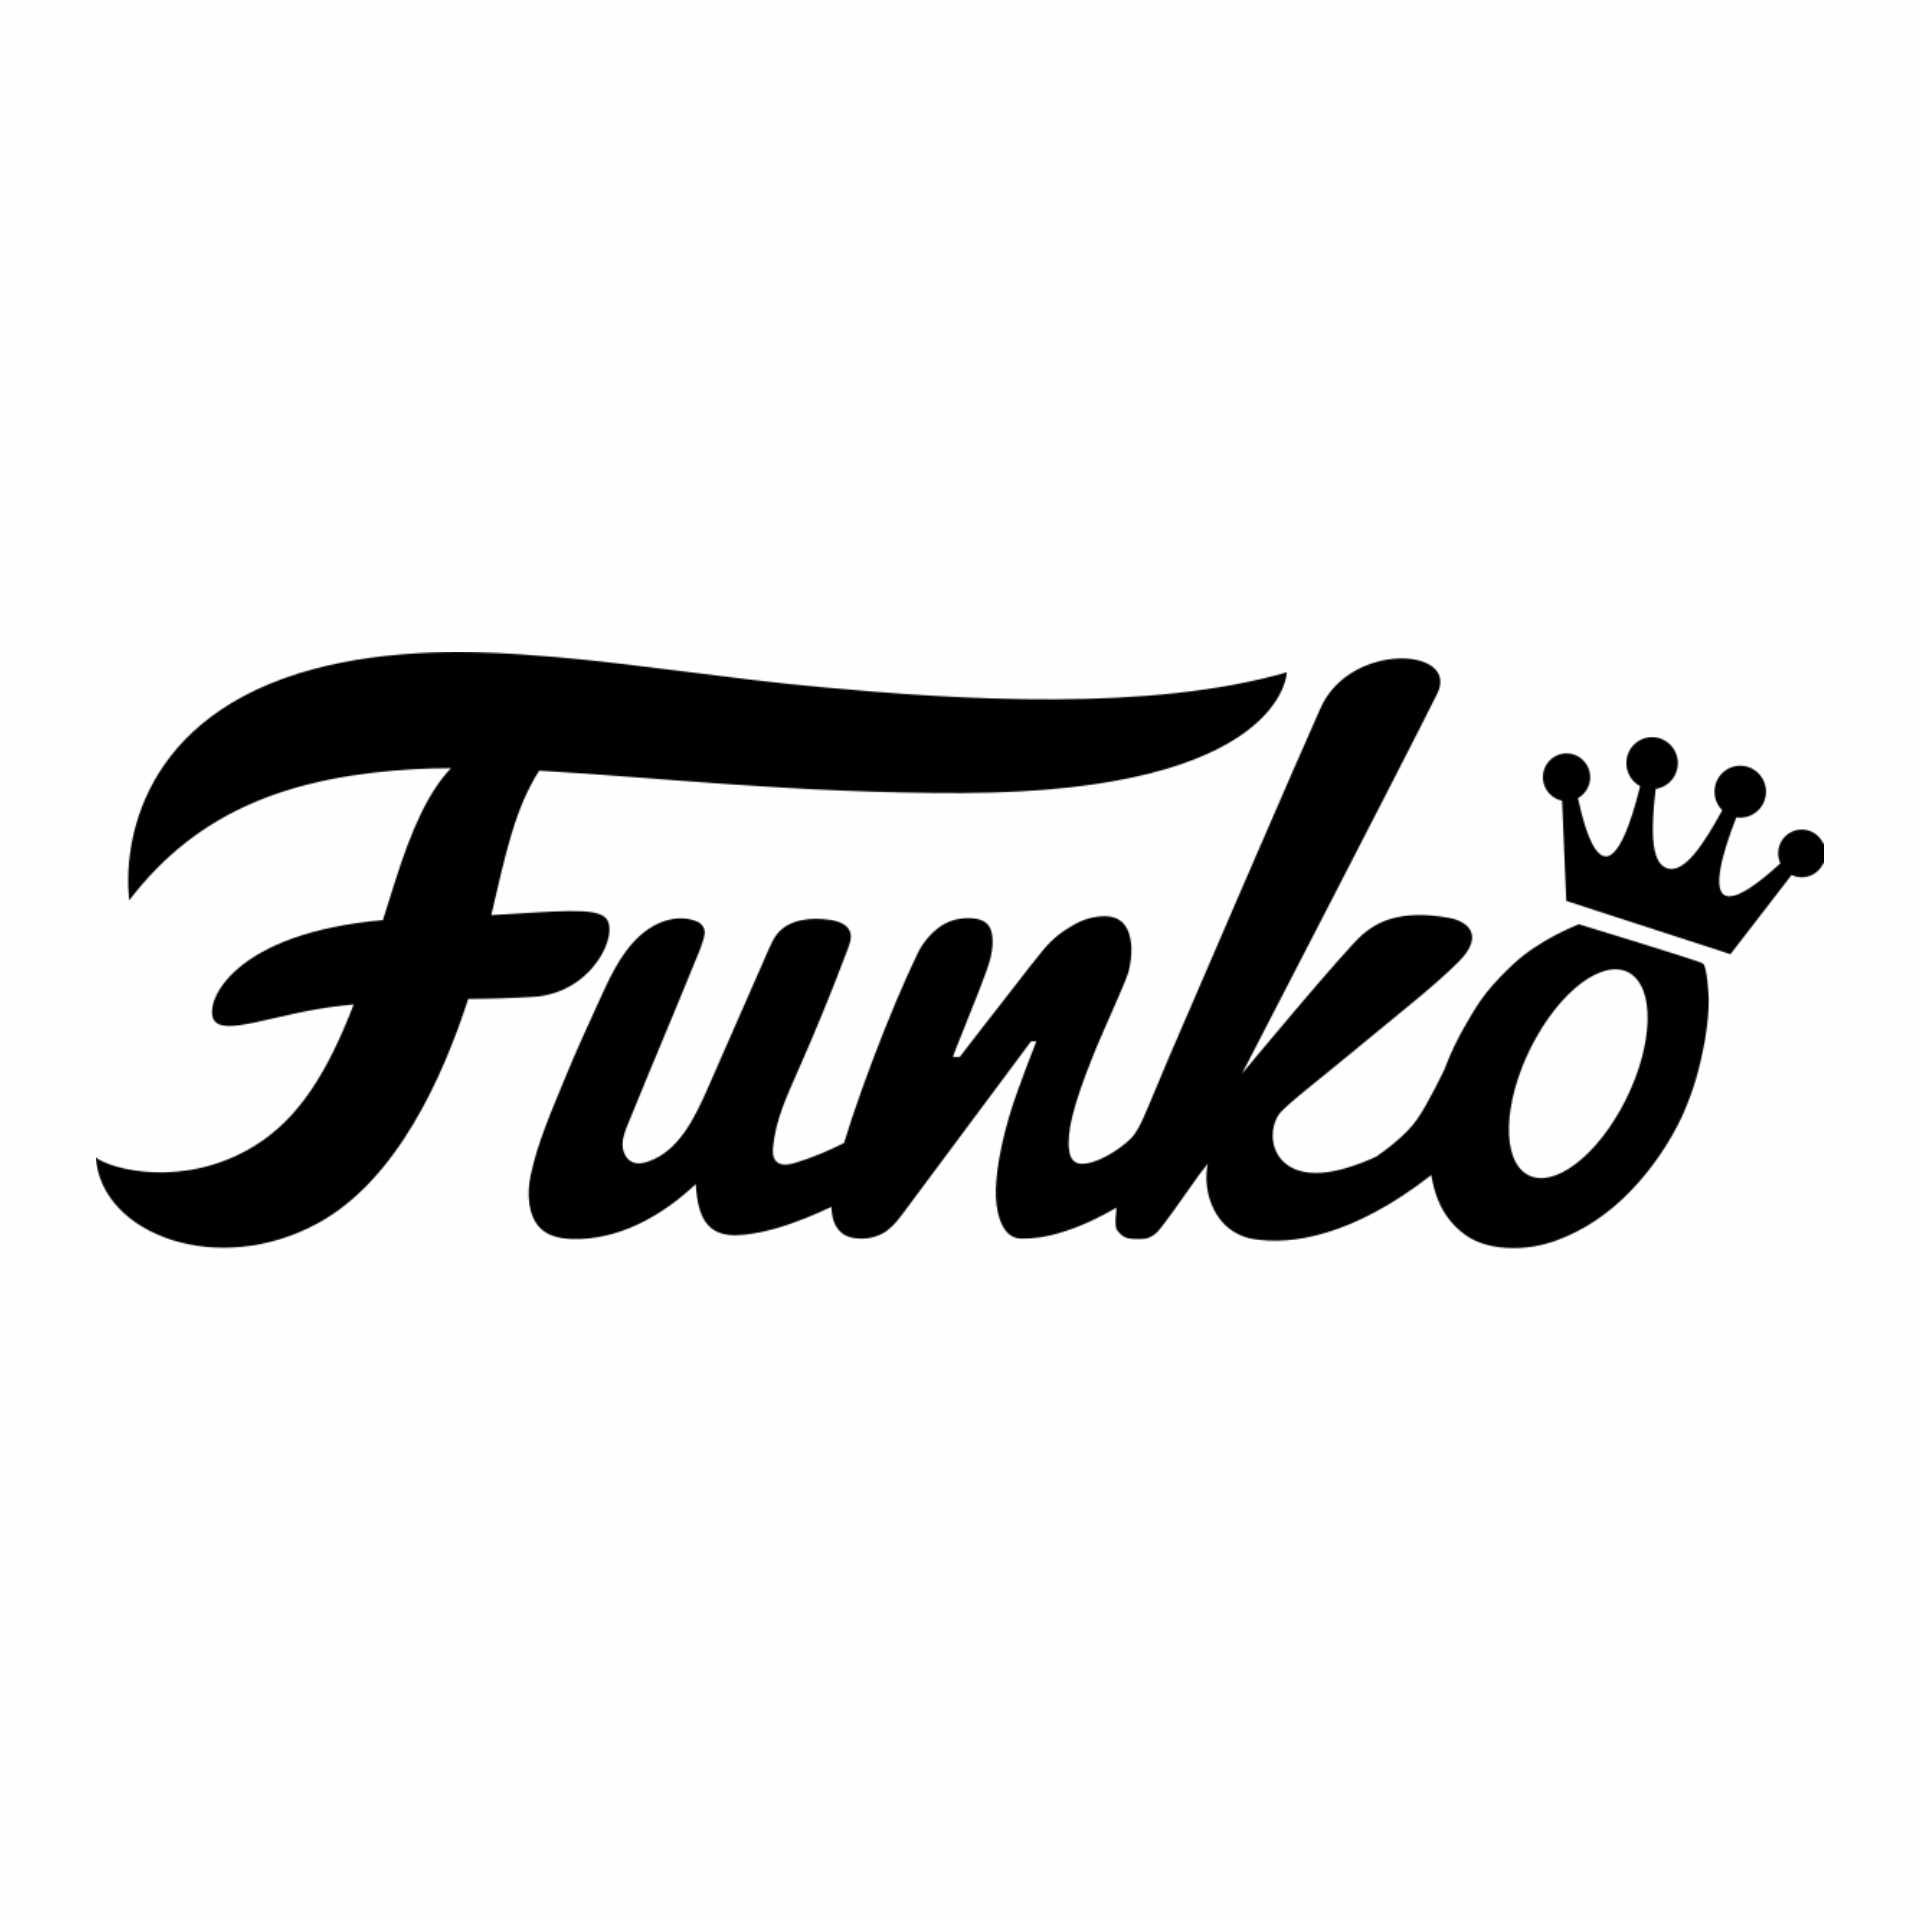 FUNKO POP! NBA STEPHEN CURRY #19 HOME (WHITE) JERSEY – Plastic Empire